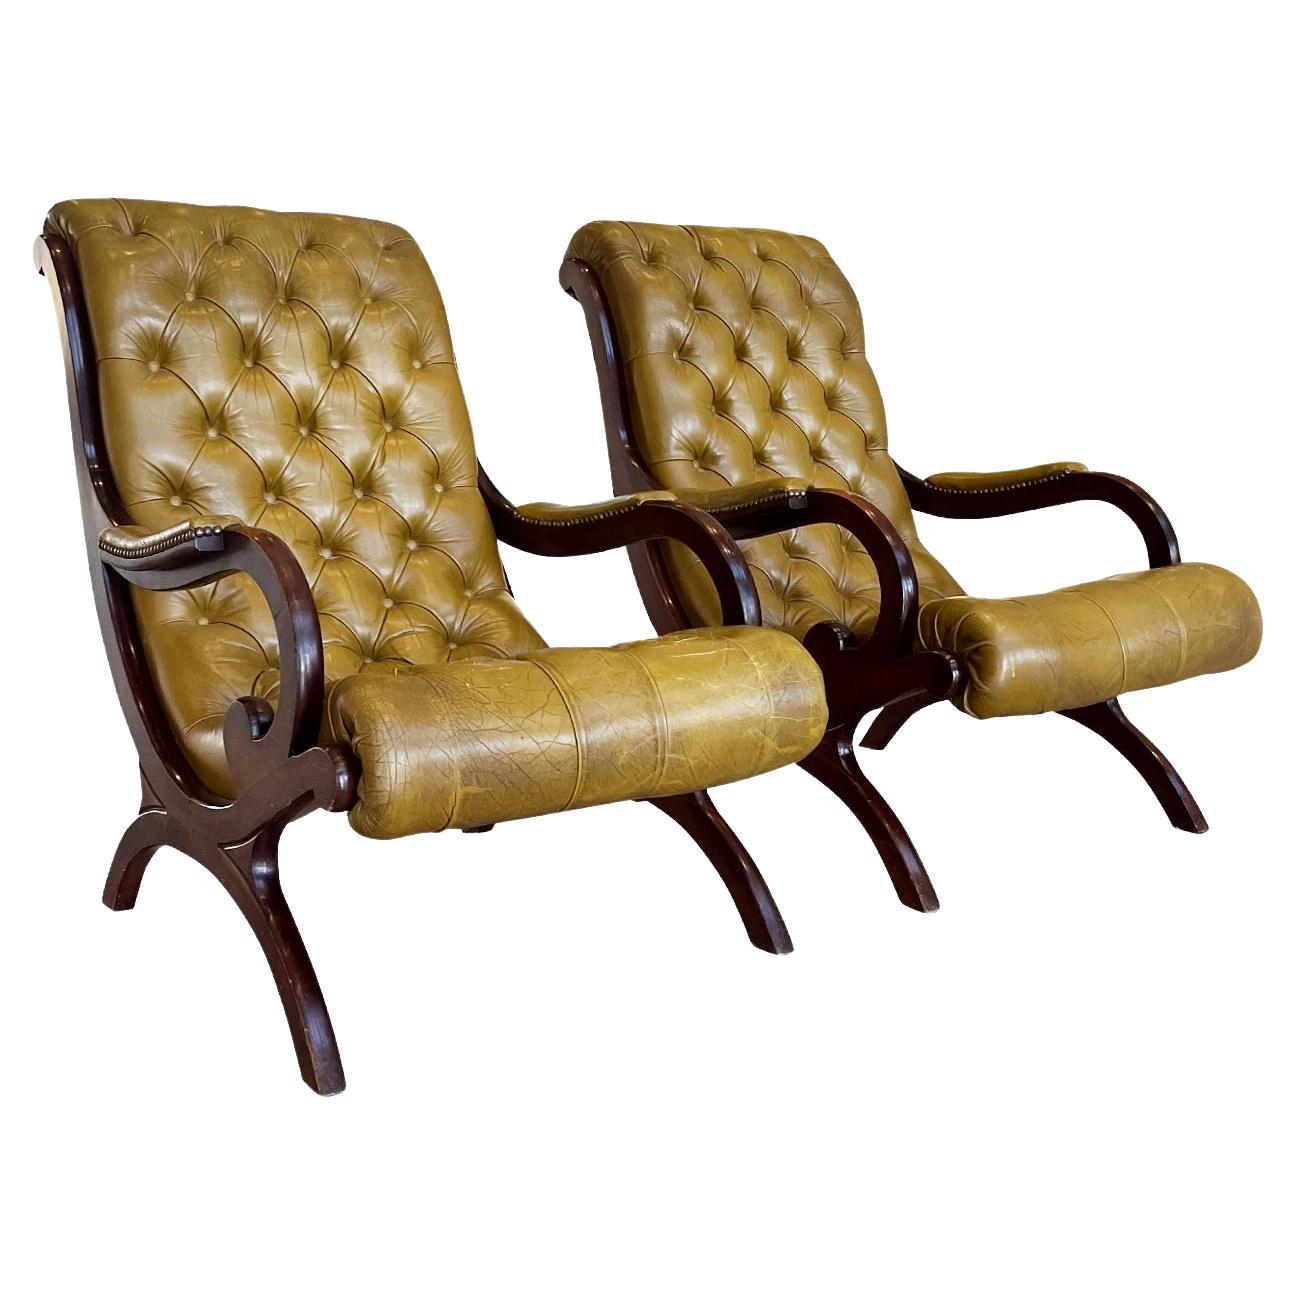 Leder- und Mahagoni-Sessel im Regency-Stil des 20. Jahrhunderts, Paar